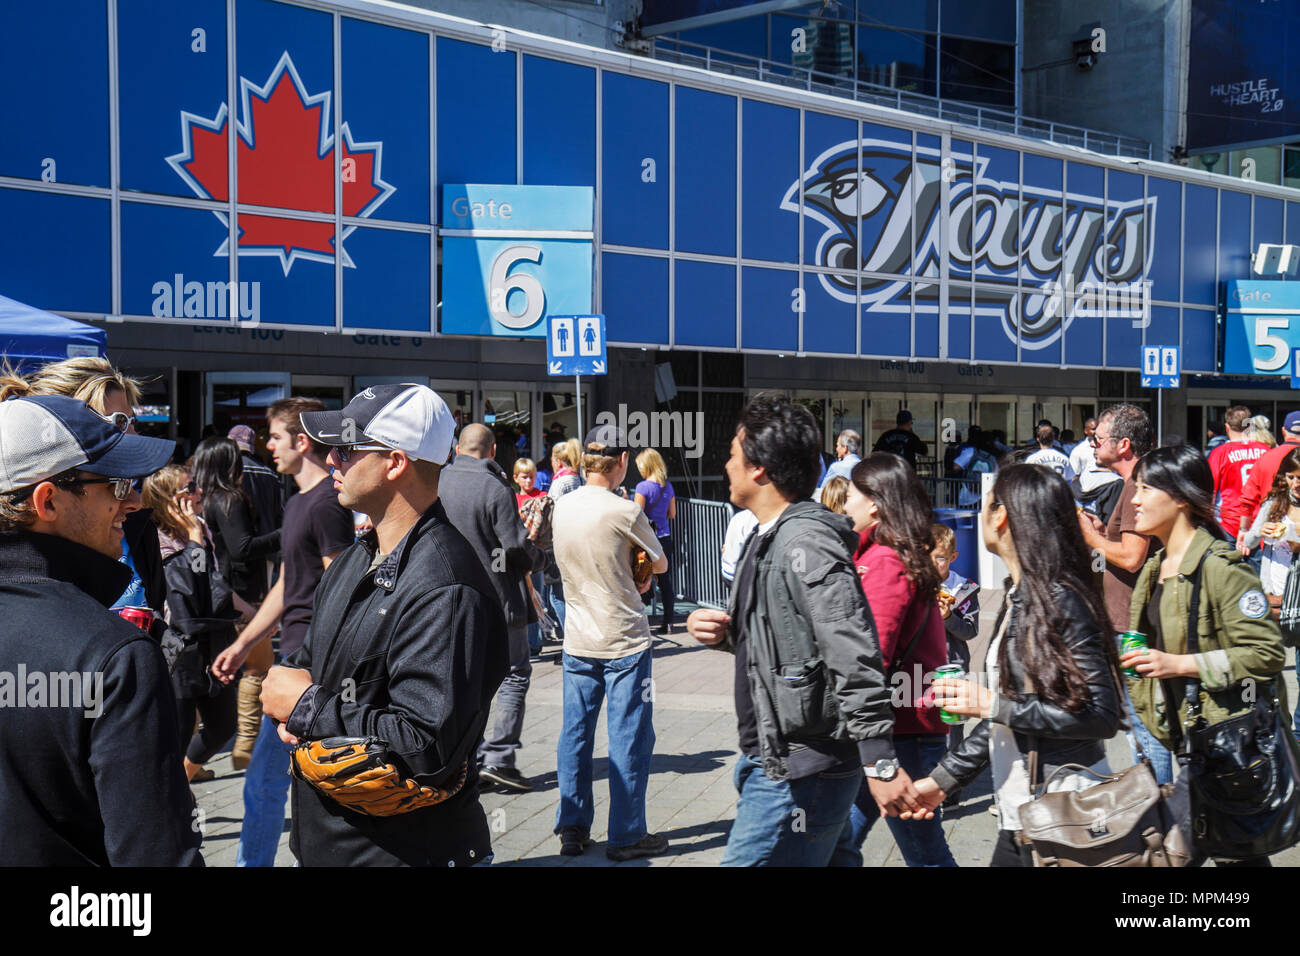 Toronto Canada,Bremner Boulevard,Rogers Centre,center,Blue Jays Major League Baseball teamal sports,outside stadium,game day,crowd,arriving fans,Asian Stock Photo